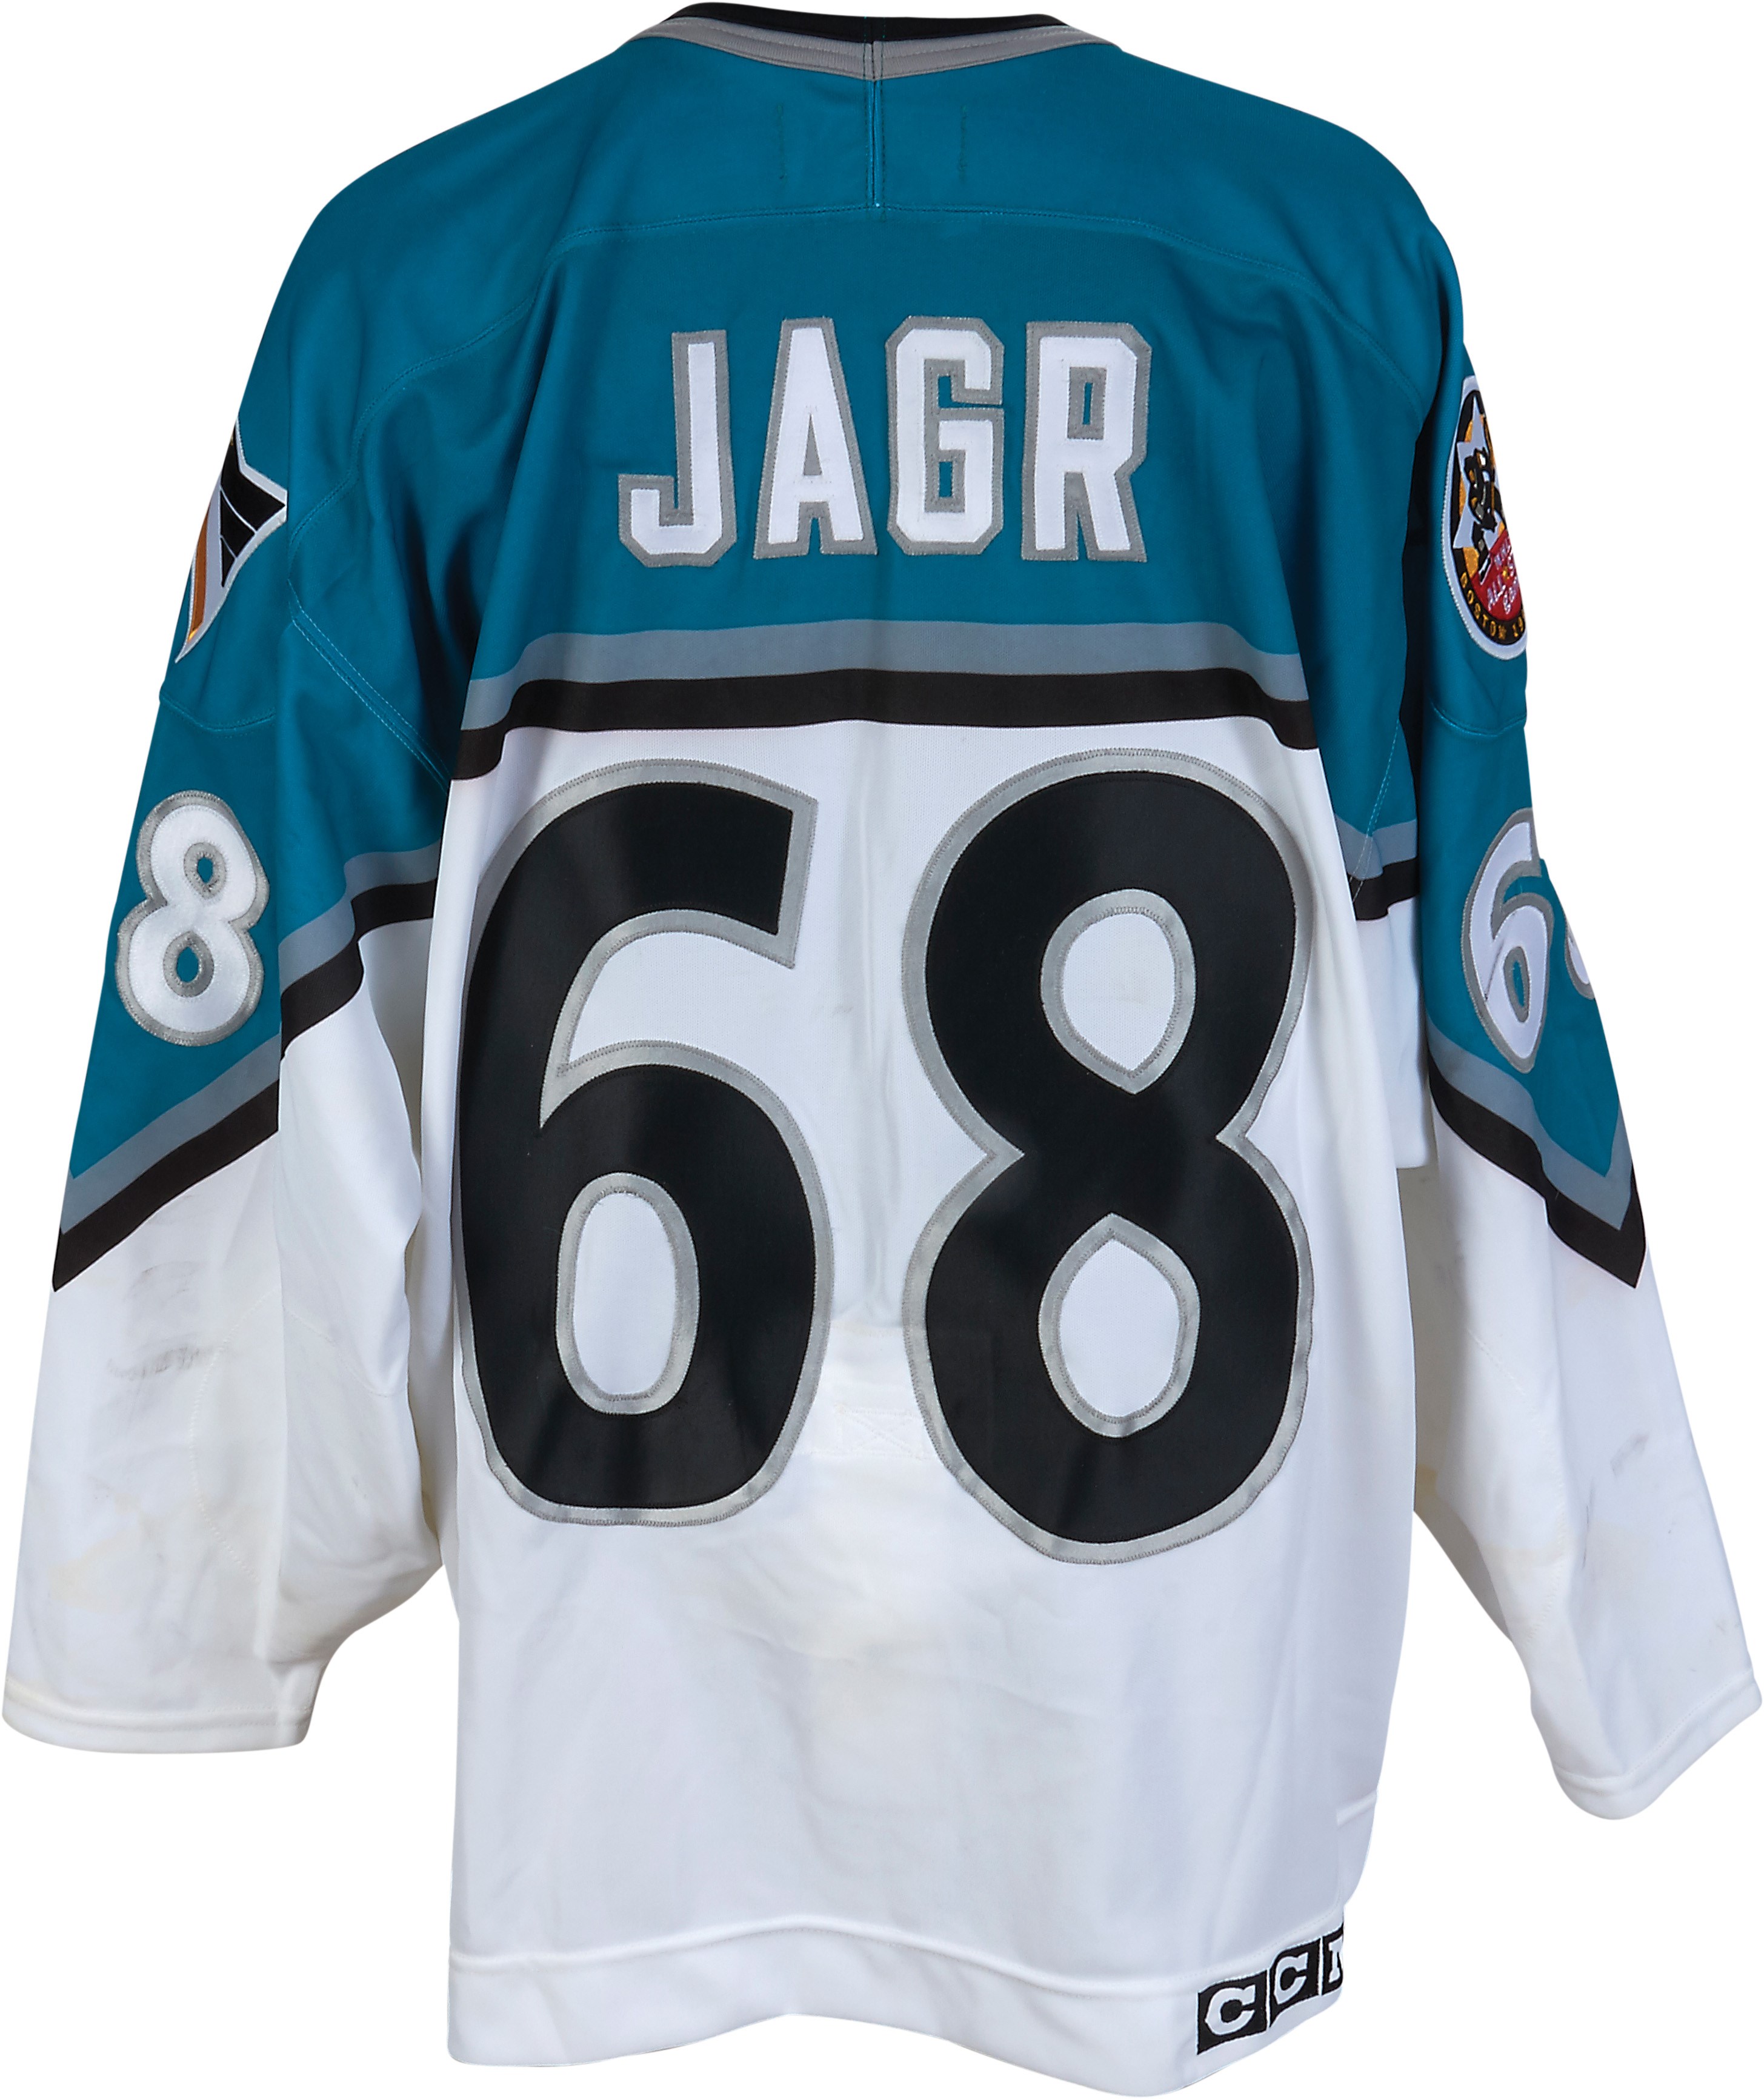 1996 Jaromir Jagr NHL All-Star Game Worn Jersey (Photo-Matched)